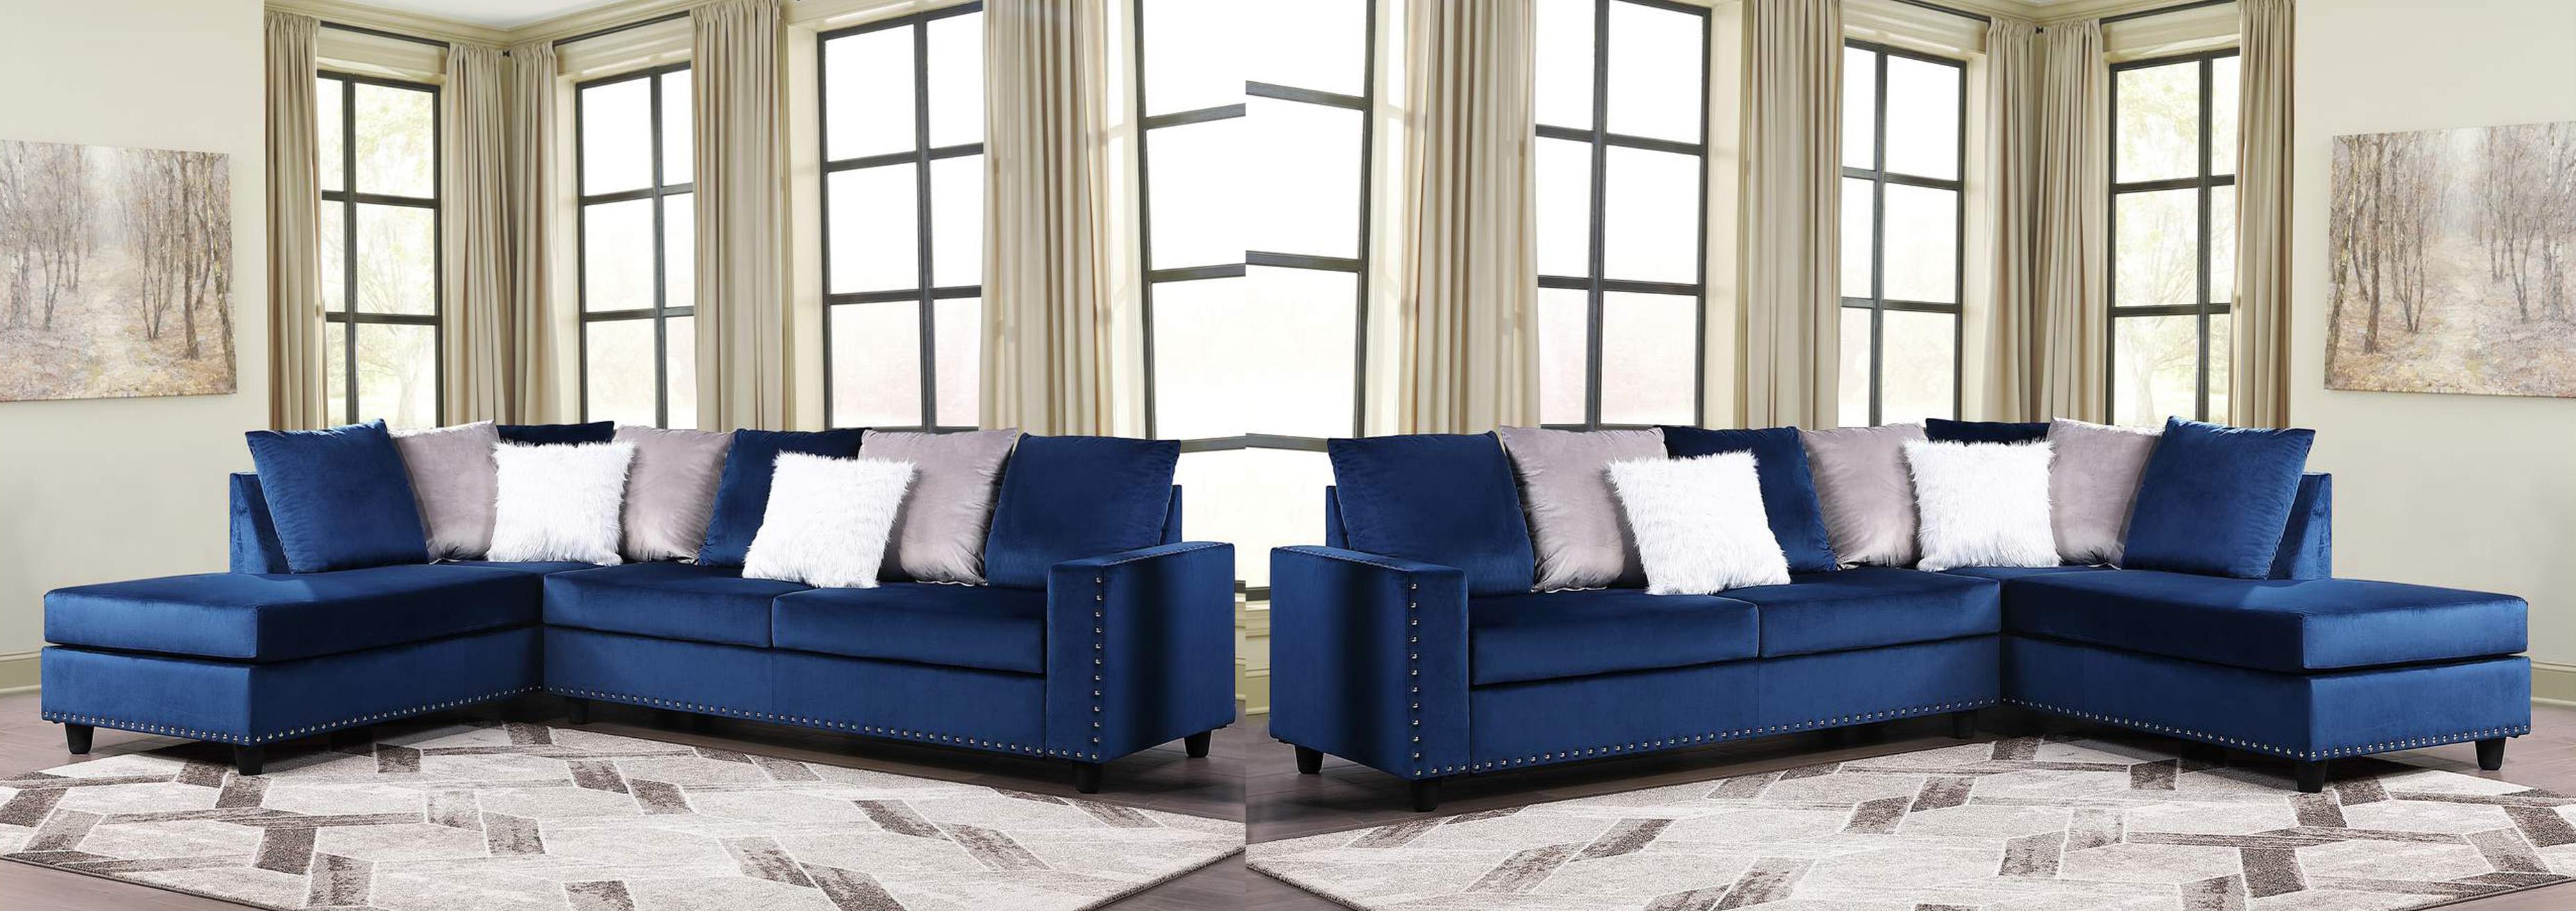 

    
Glam Navy Fabric Sectional Sofa MARTHA Galaxy Home Contemporary Modern
